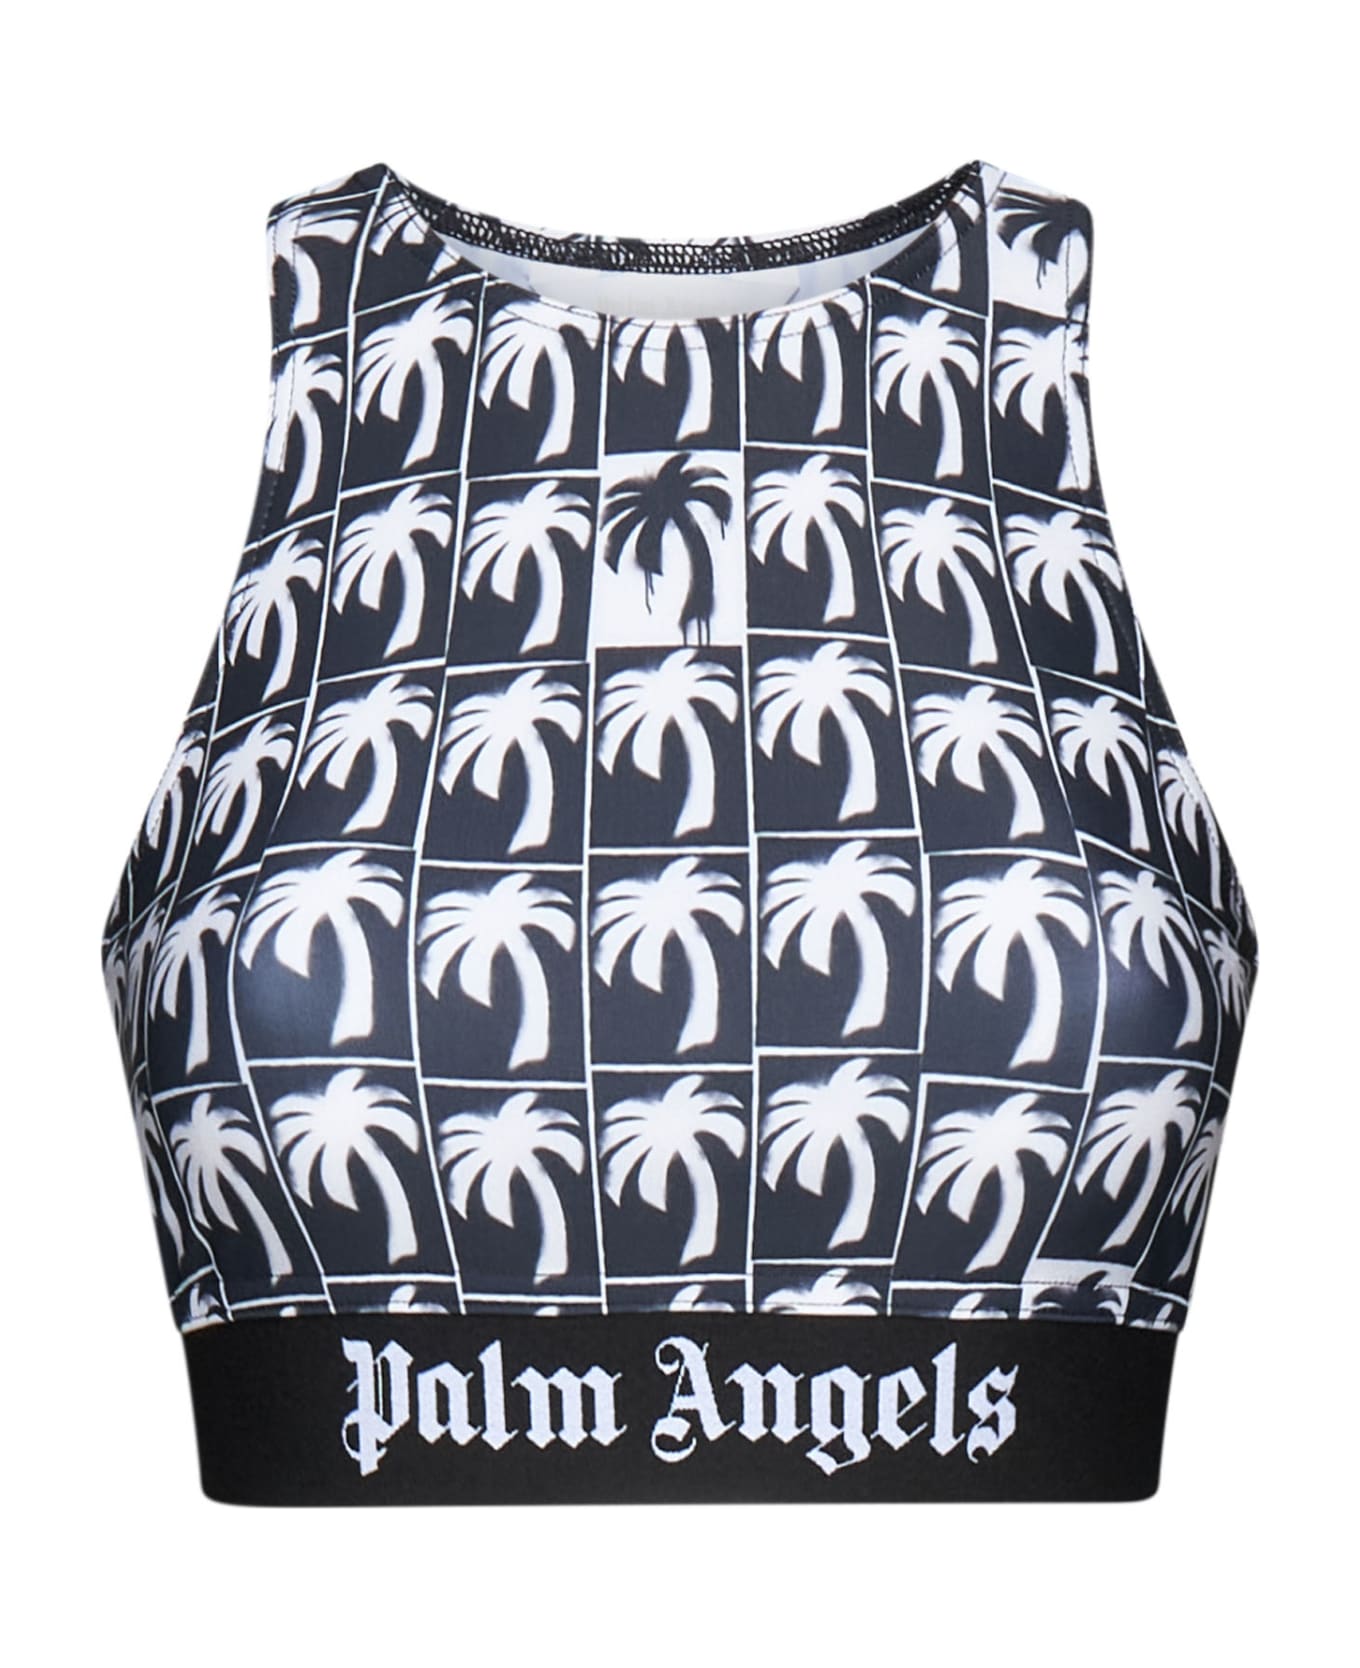 Palm Angels Top - Black white